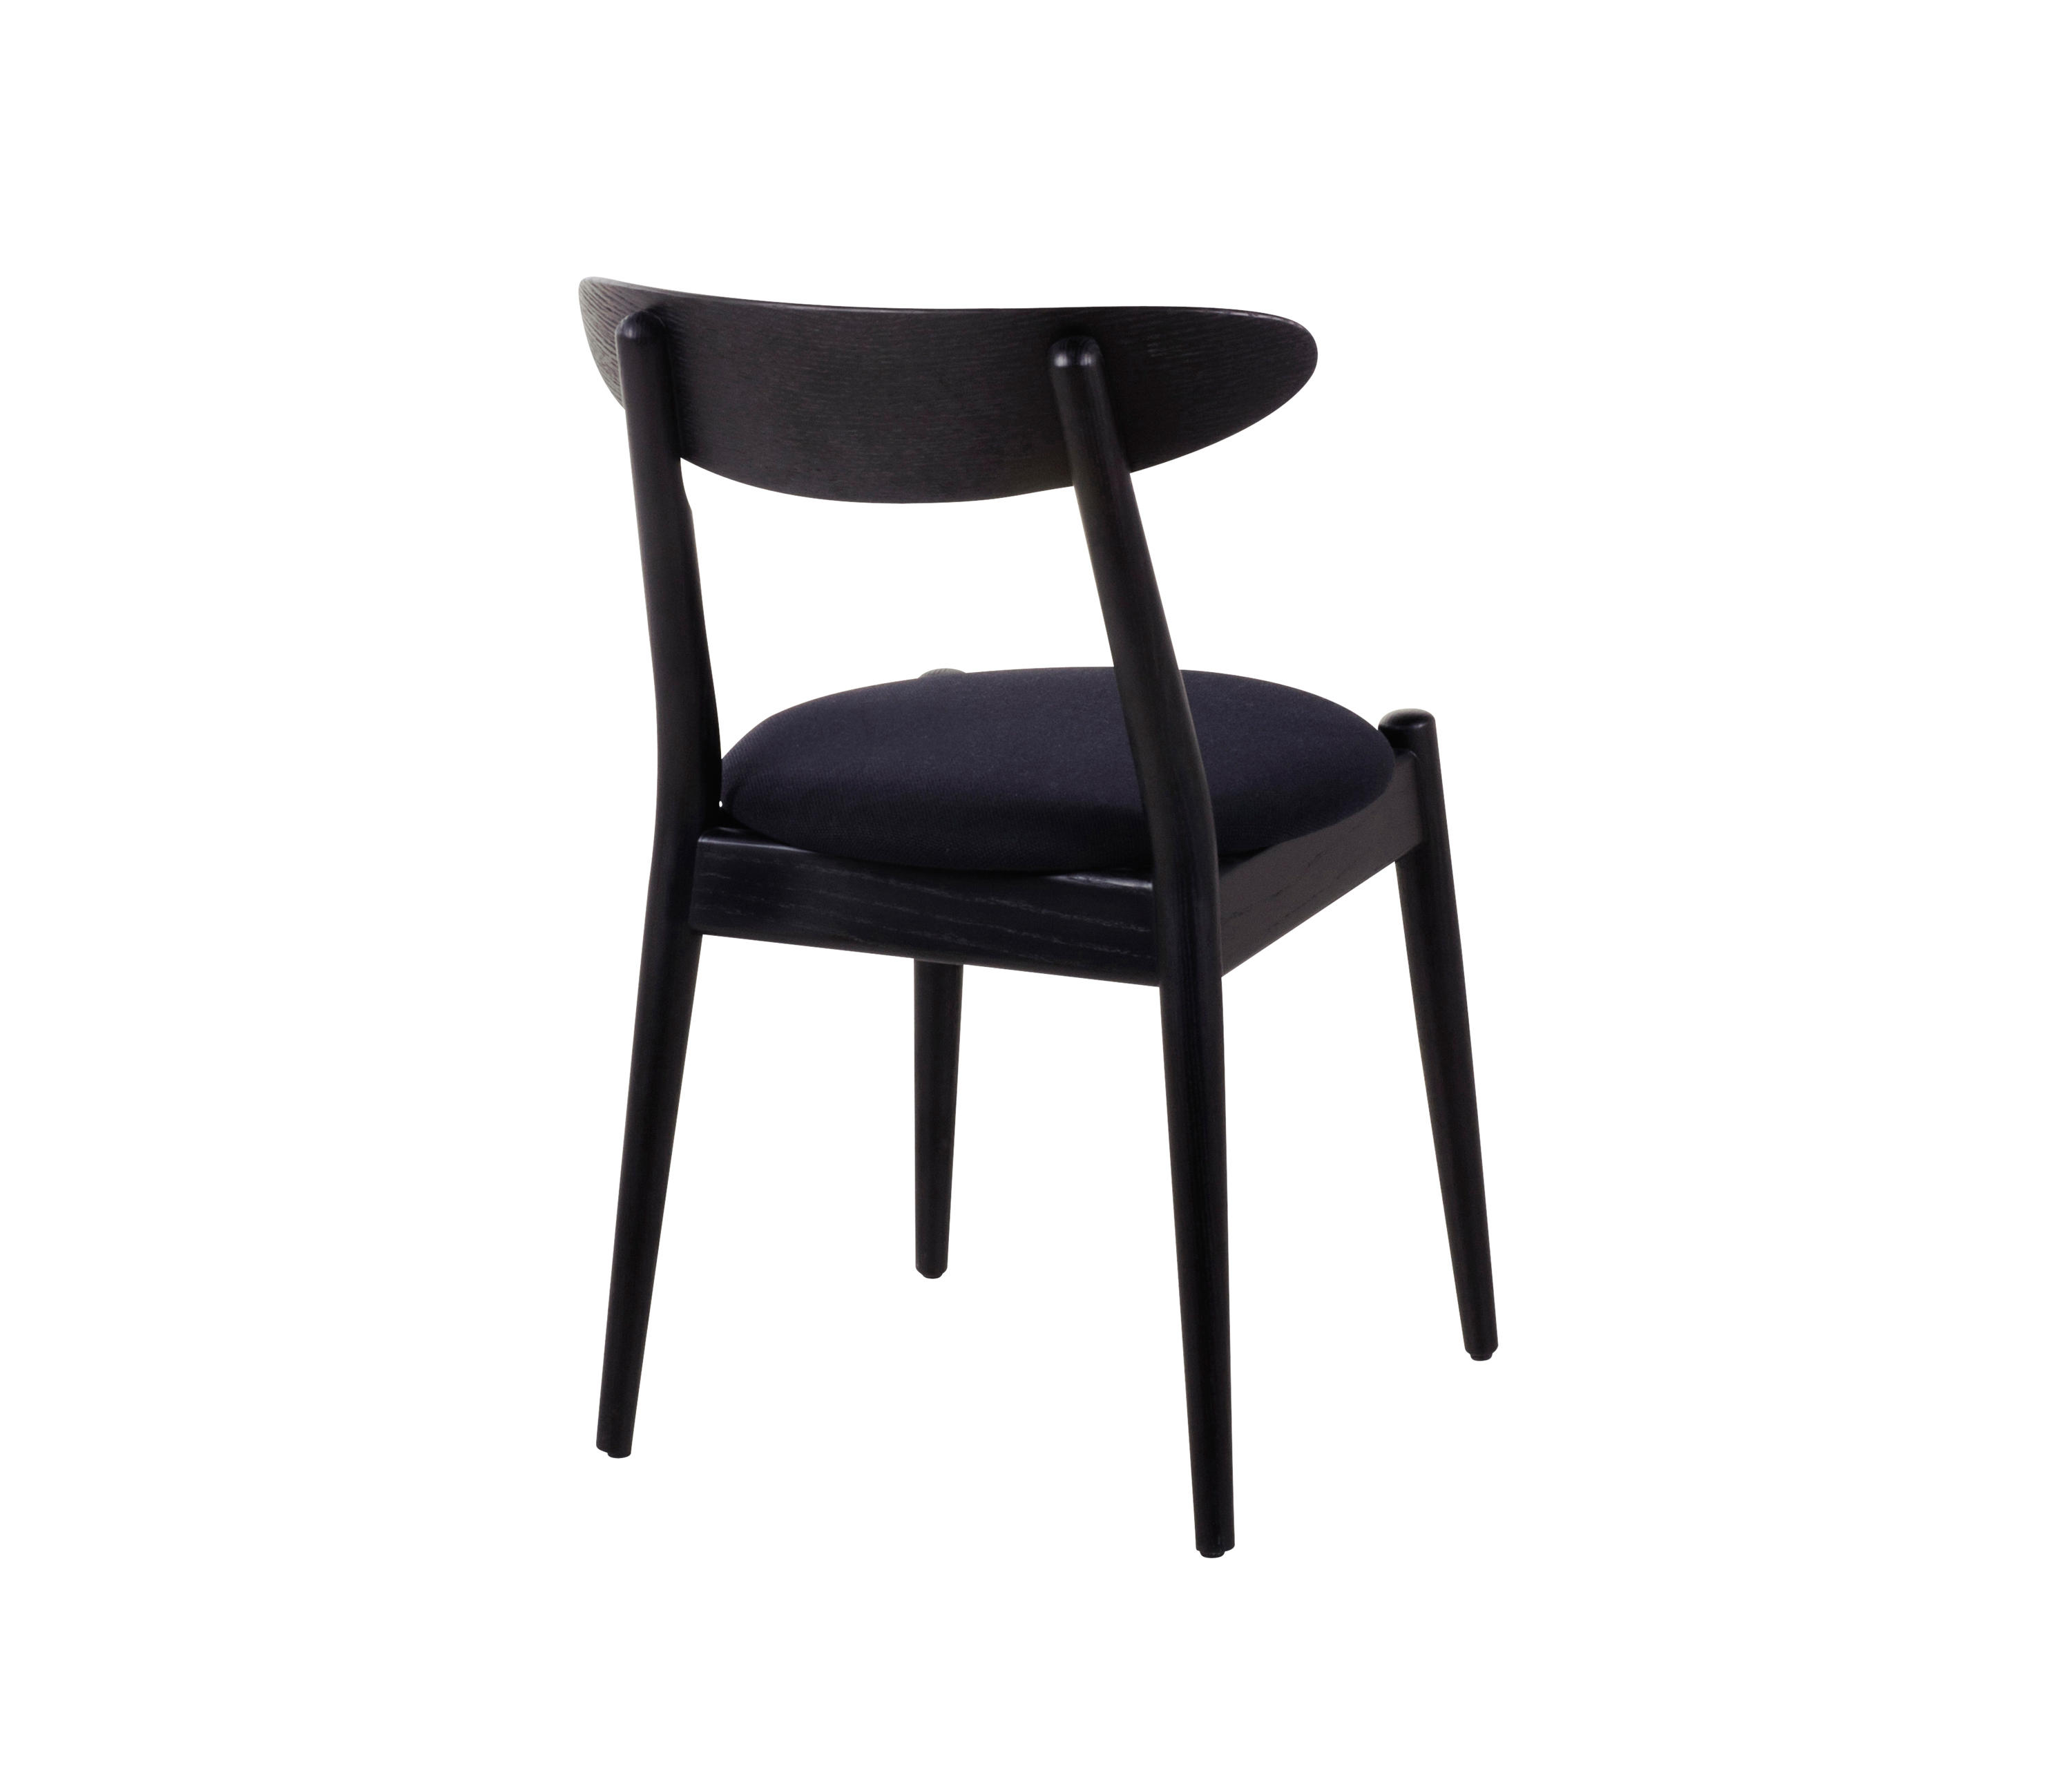 Louisiana Chair (1958) & designer furniture | Architonic